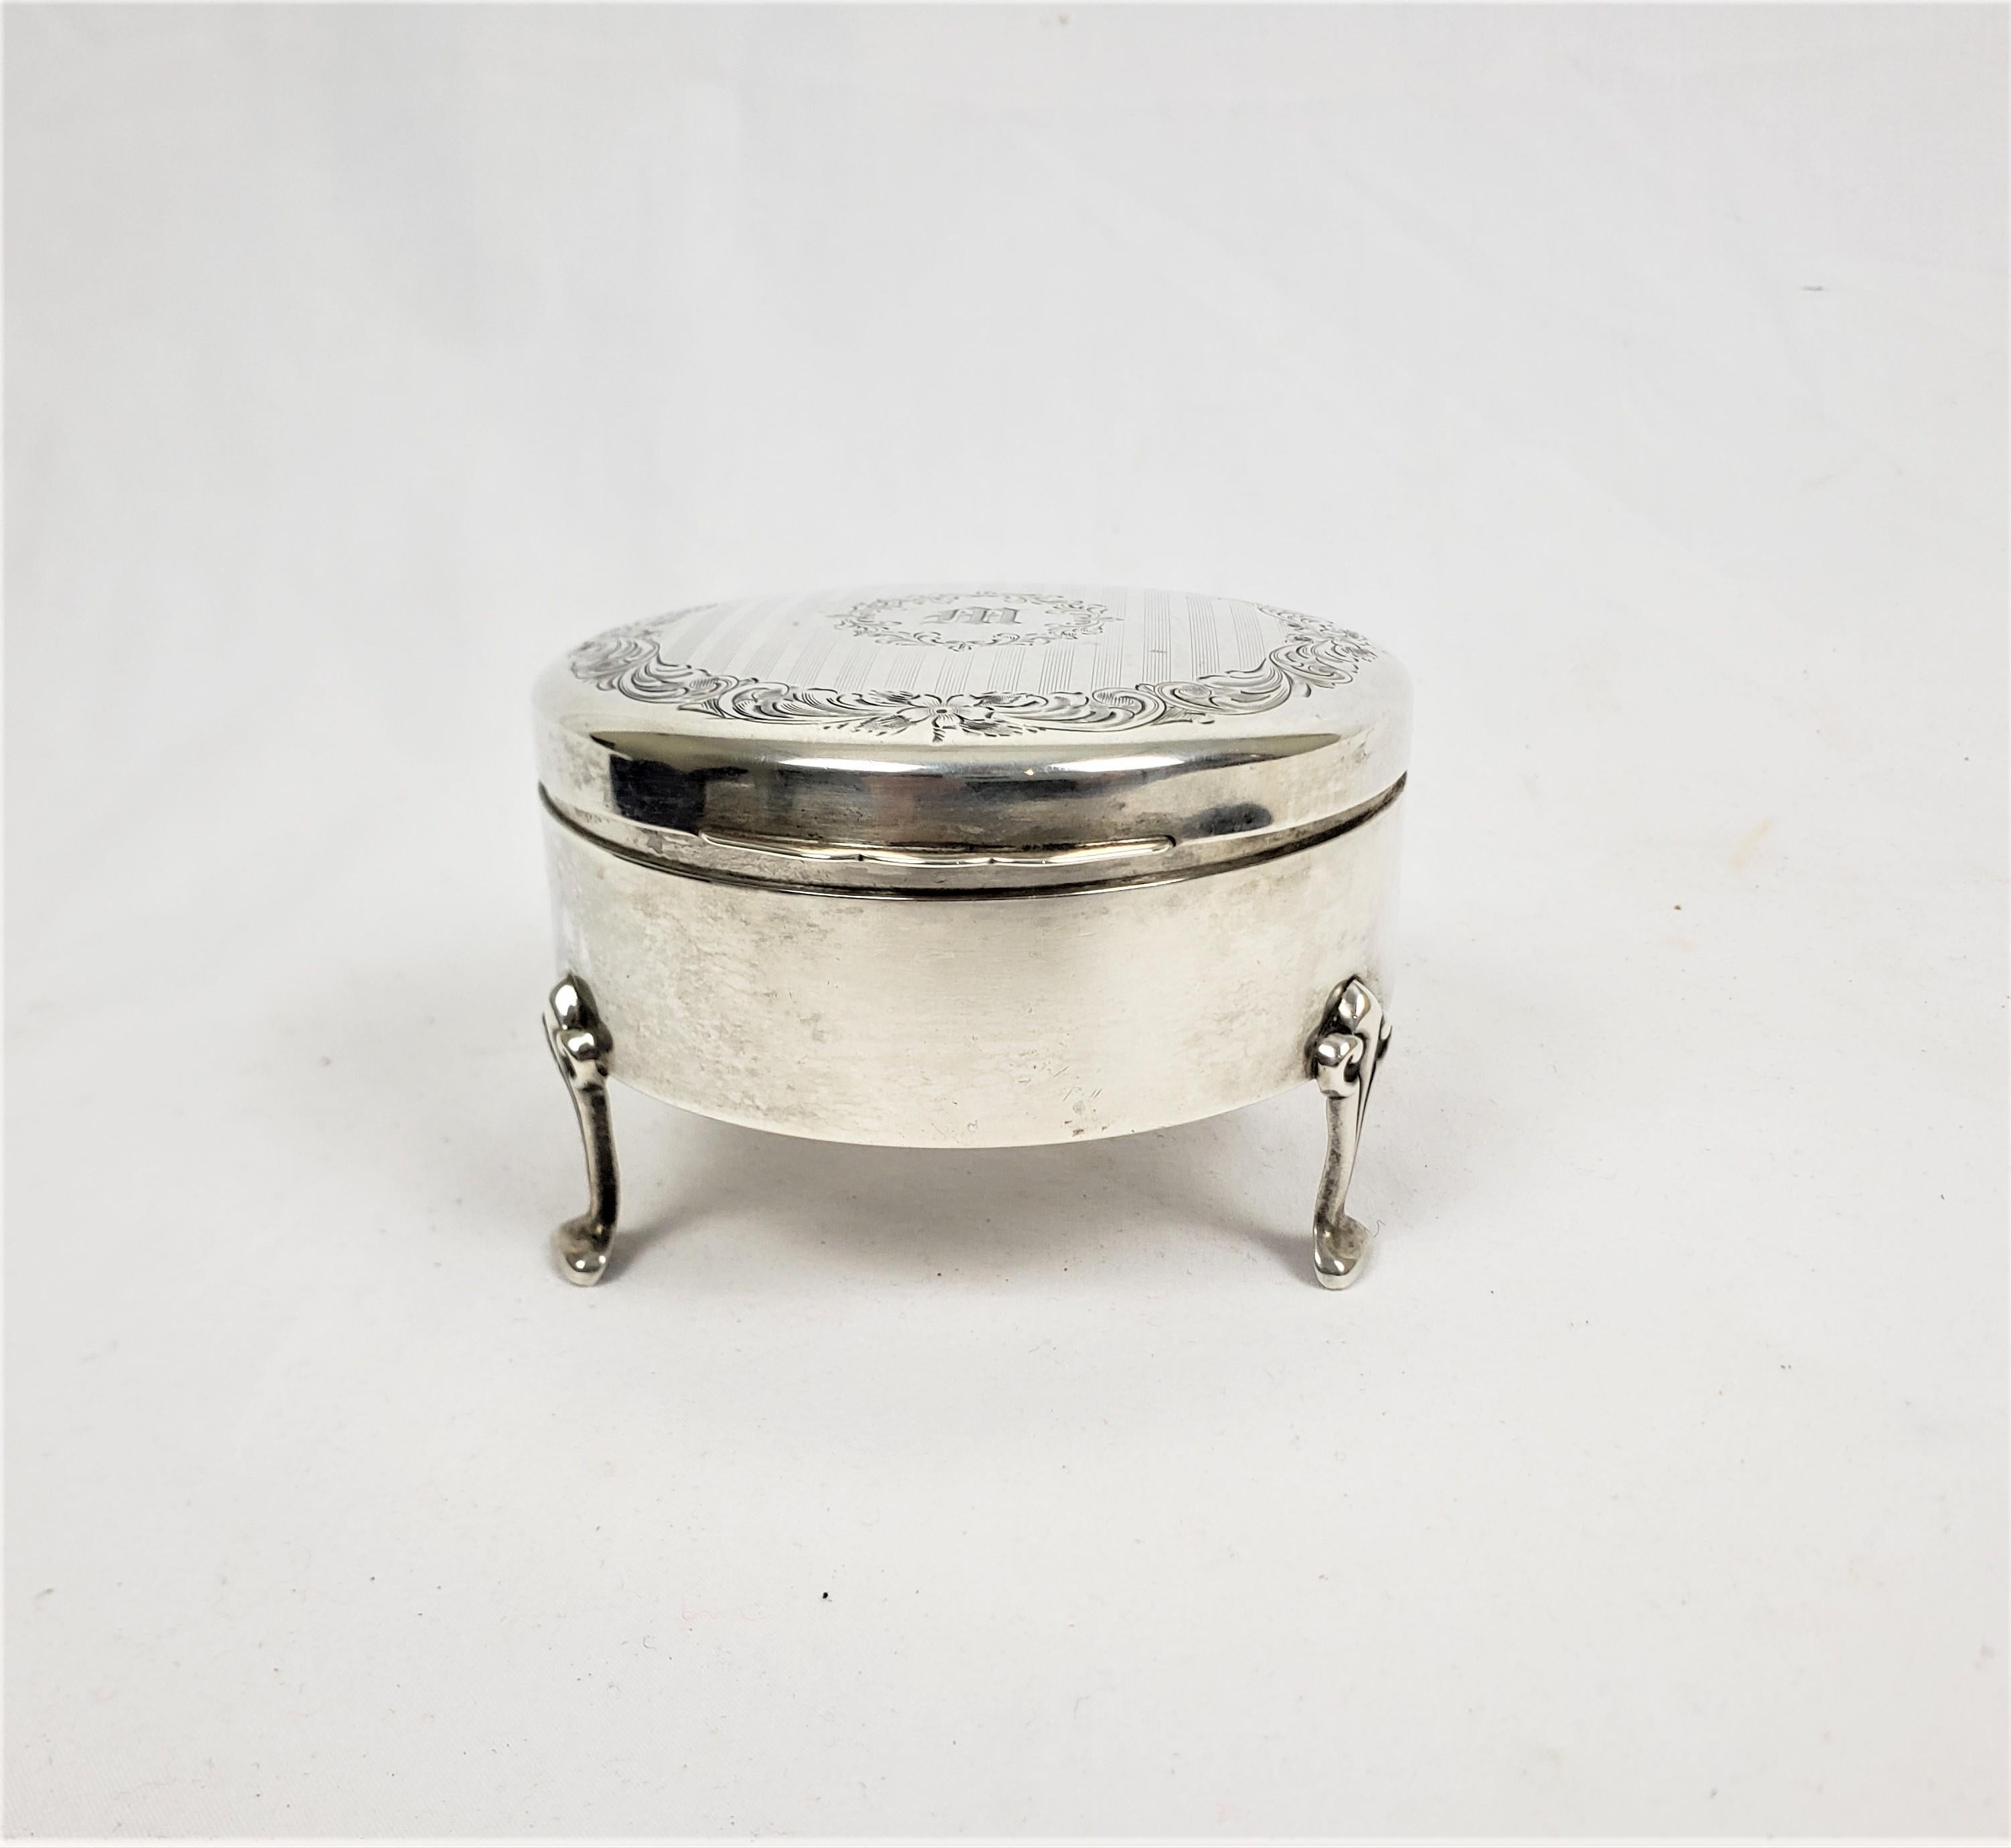 birks silver ring box